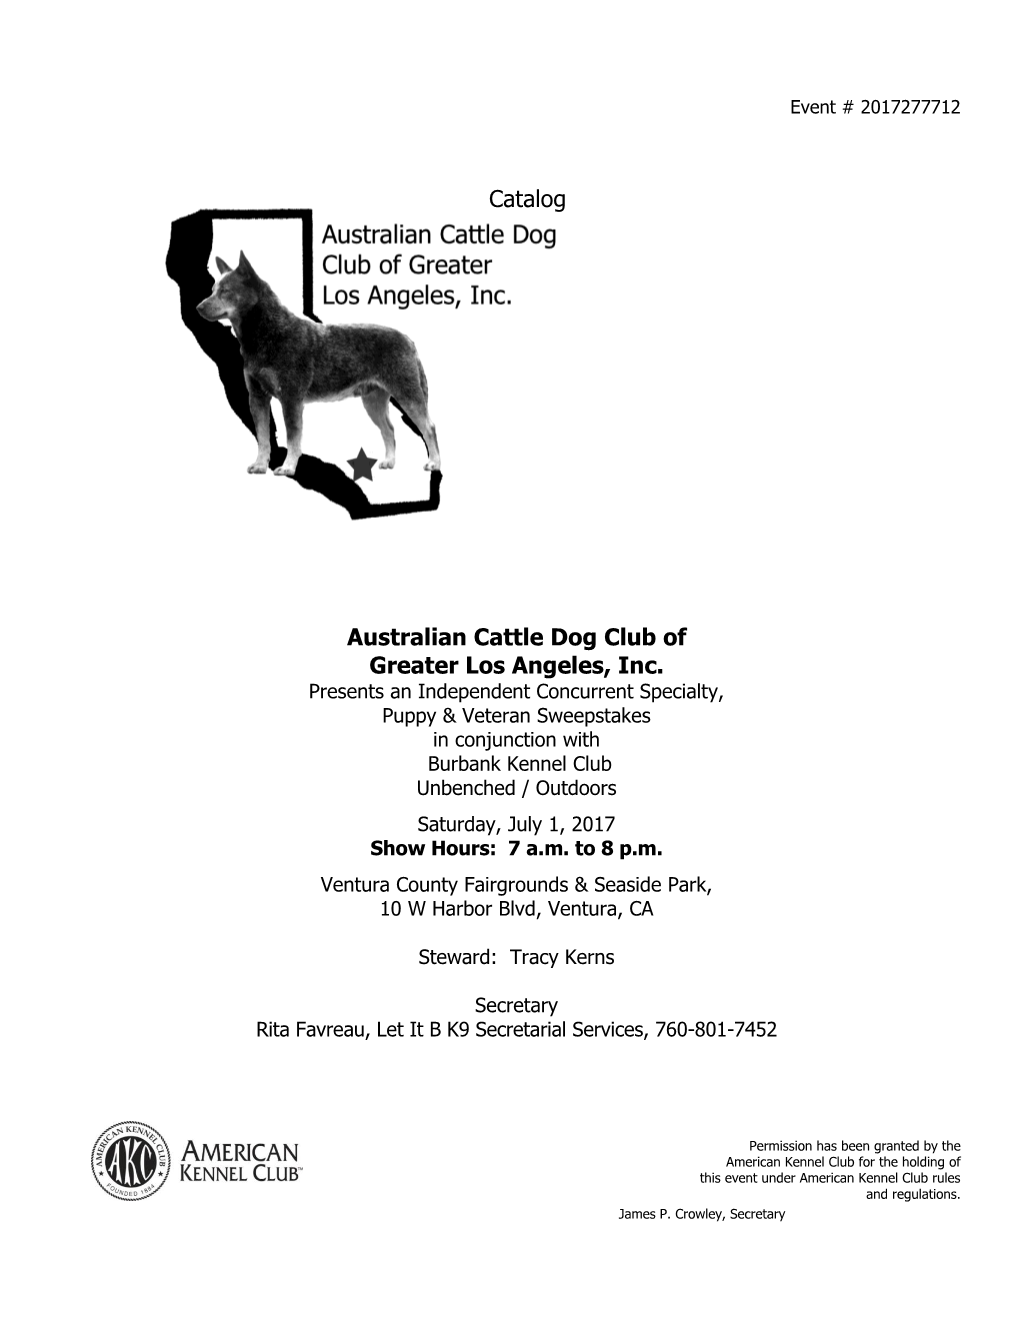 Catalog Australian Cattle Dog Club of Greater Los Angeles, Inc